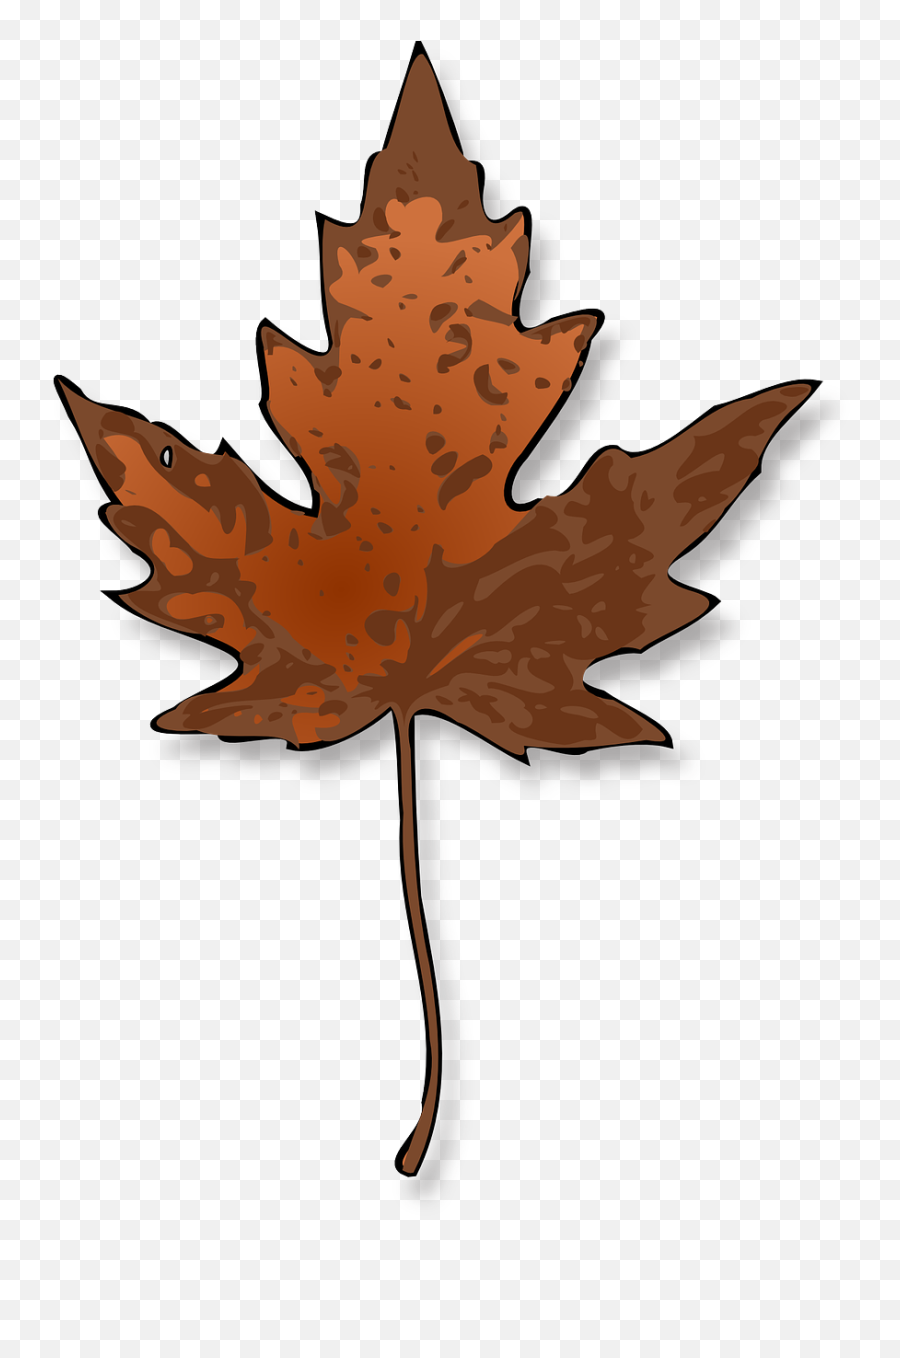 Maple Leaf Clip Art - Vector Clip Art Online Maple Leaf Clip Art Png,Maple Leaves Png